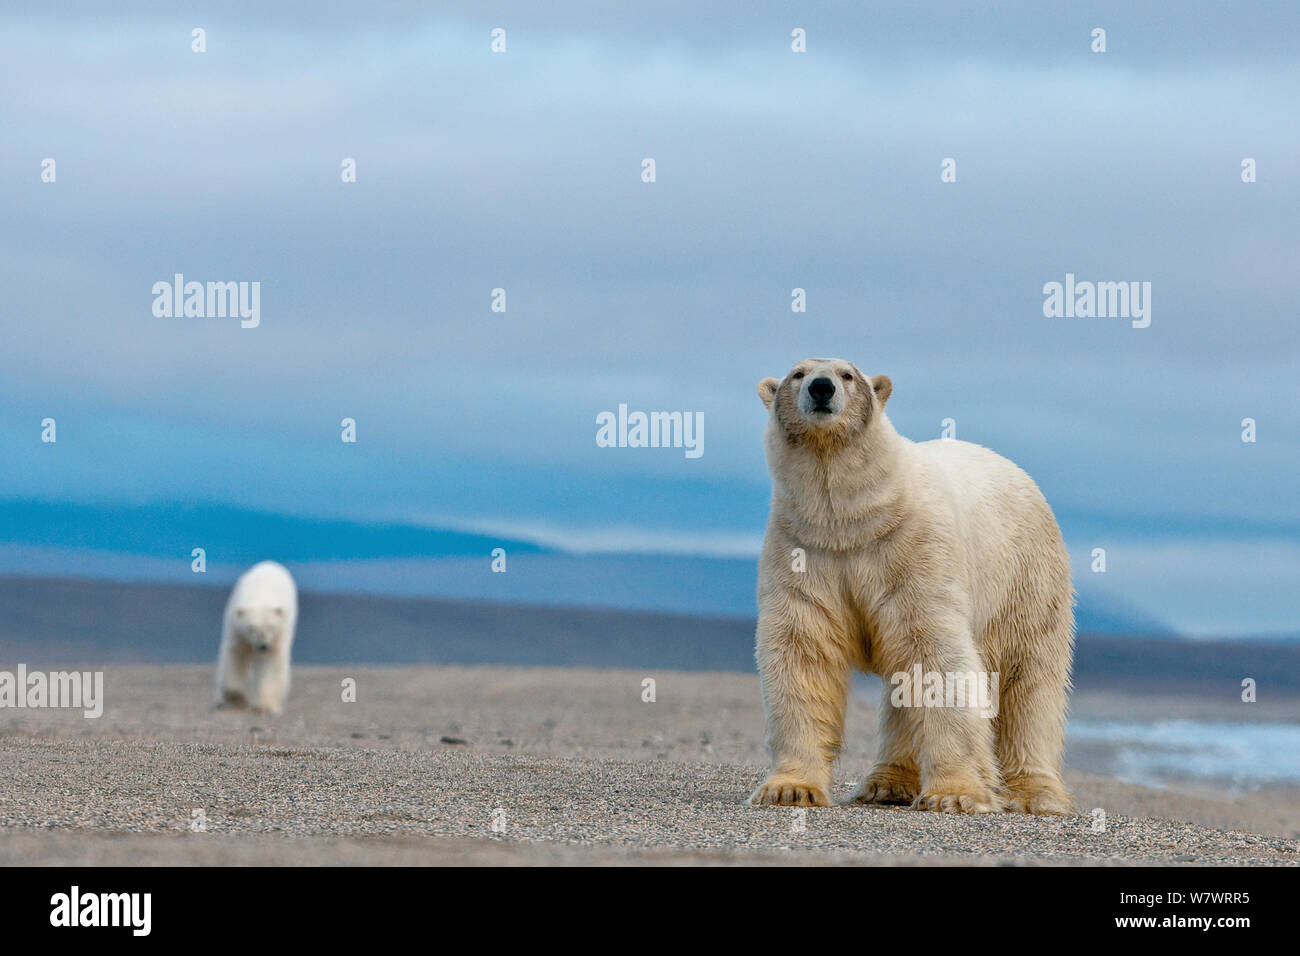 Polar bear (Ursus maritimus) walking along beach with another behind, Wrangel Island, Far Eastern Russia, September. Stock Photo